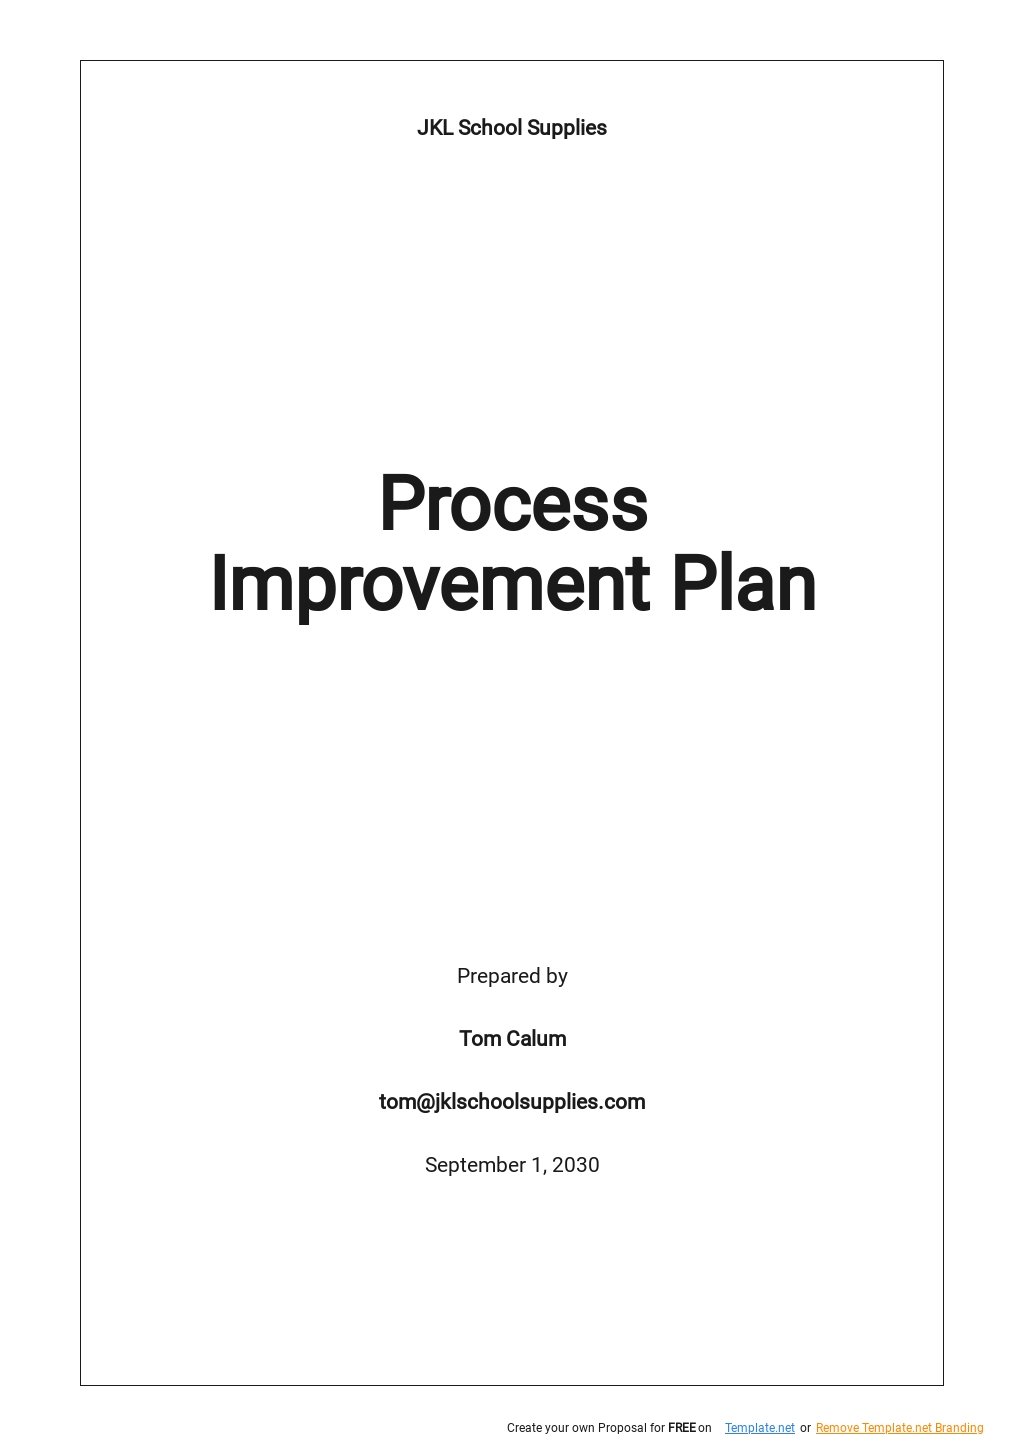 process improvement research paper